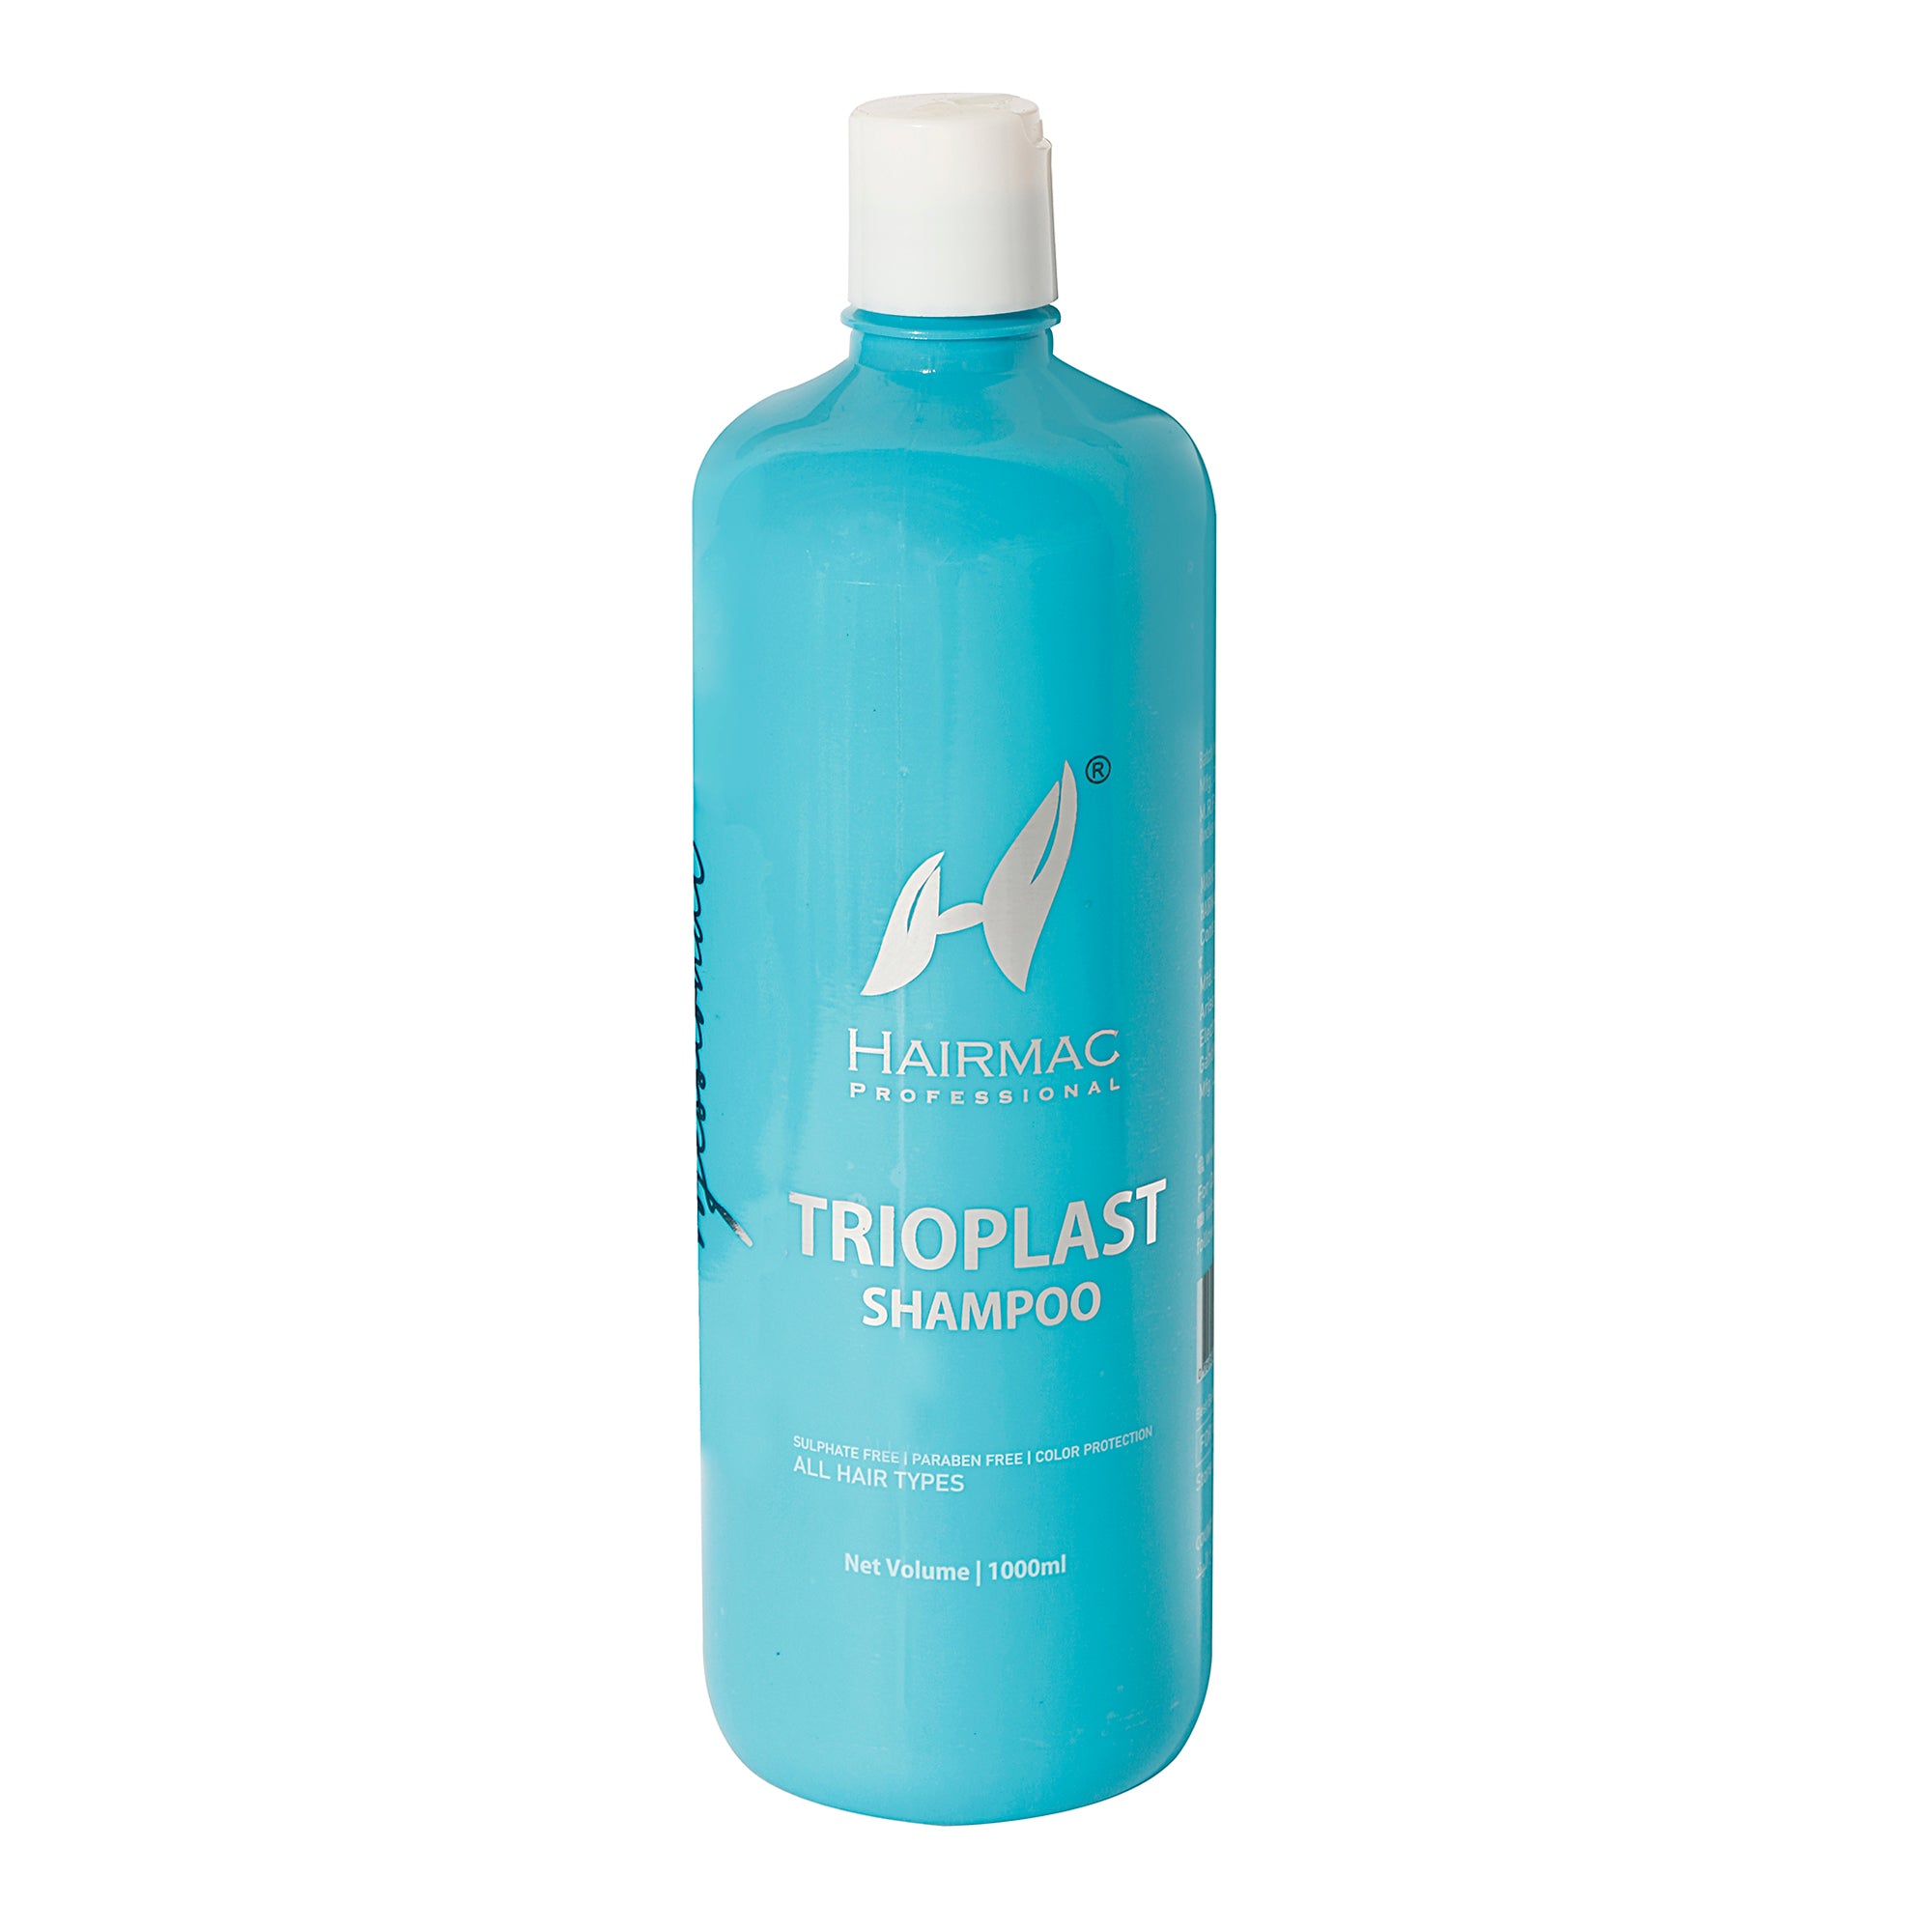 Trioplast Shampoo